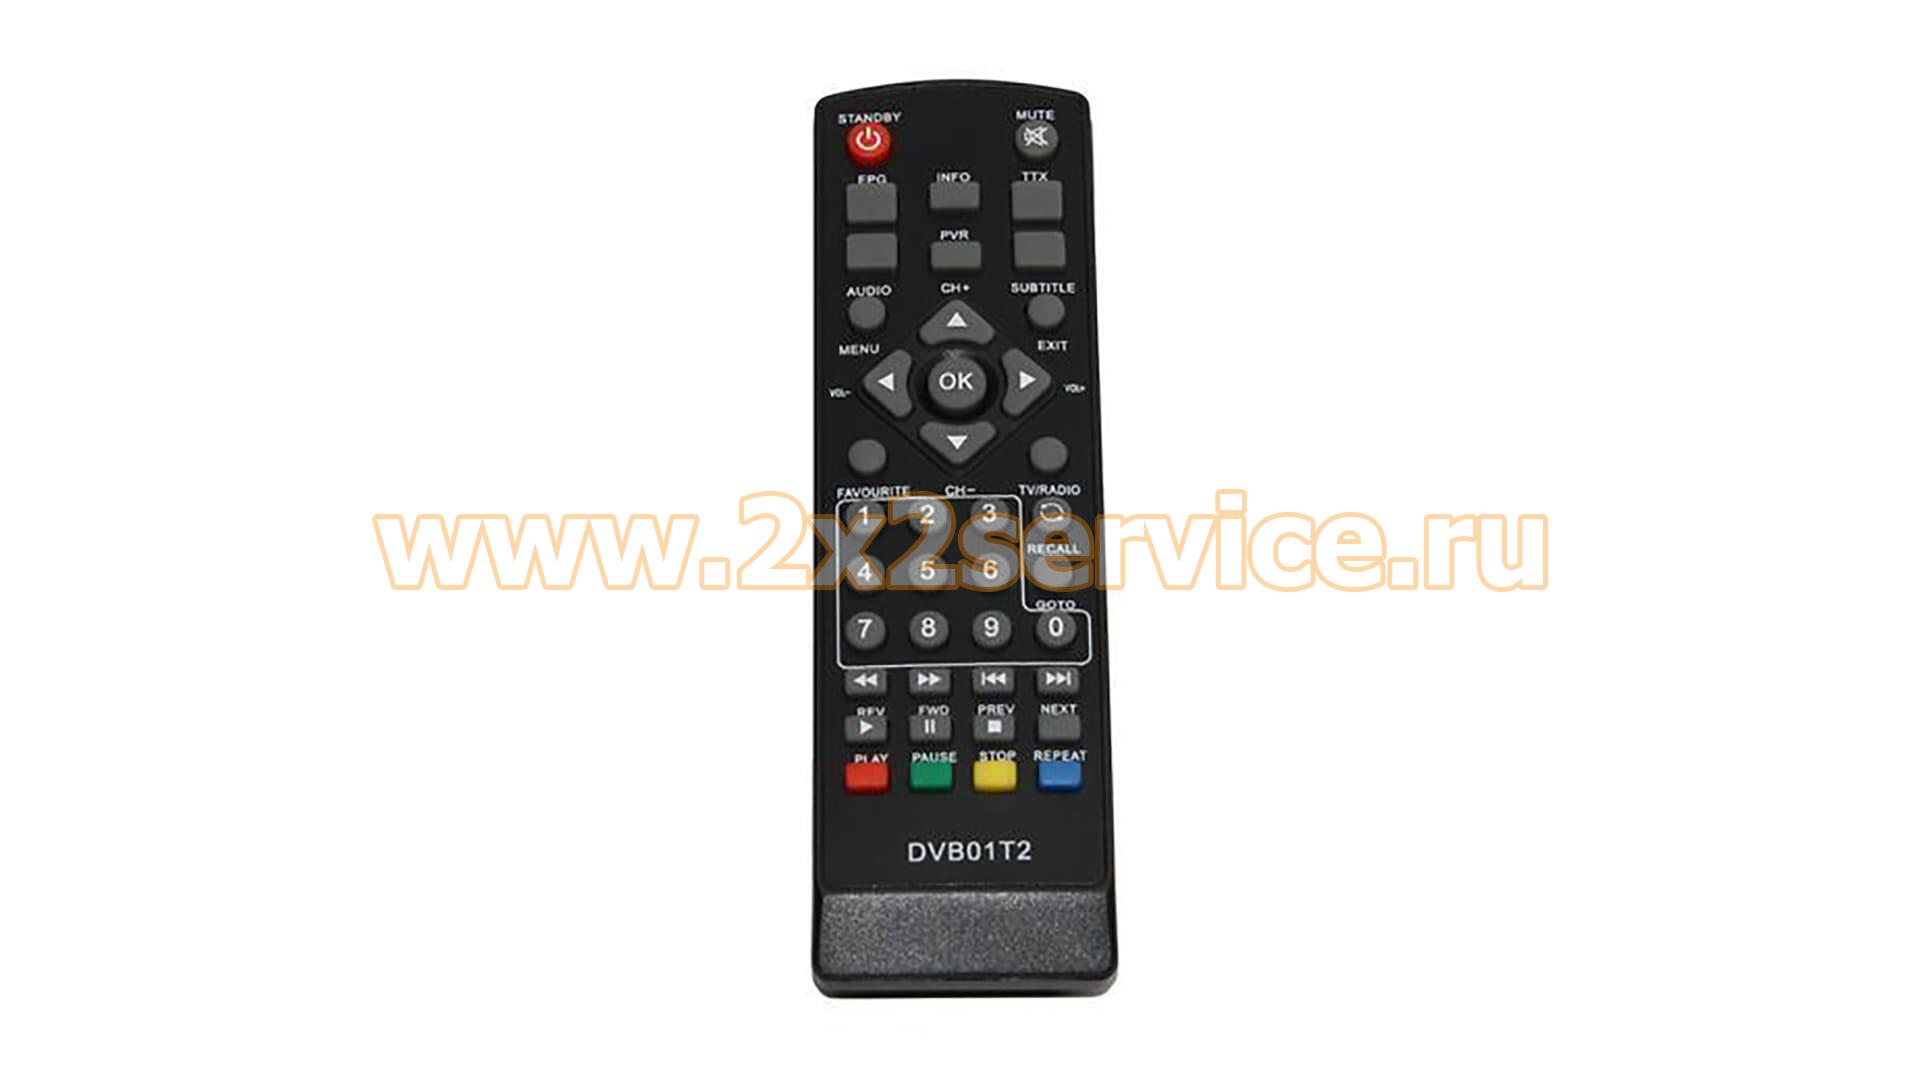 Пульт тв-приставки DVB-T2 Hyundai (QF-6222 DVB01T2)